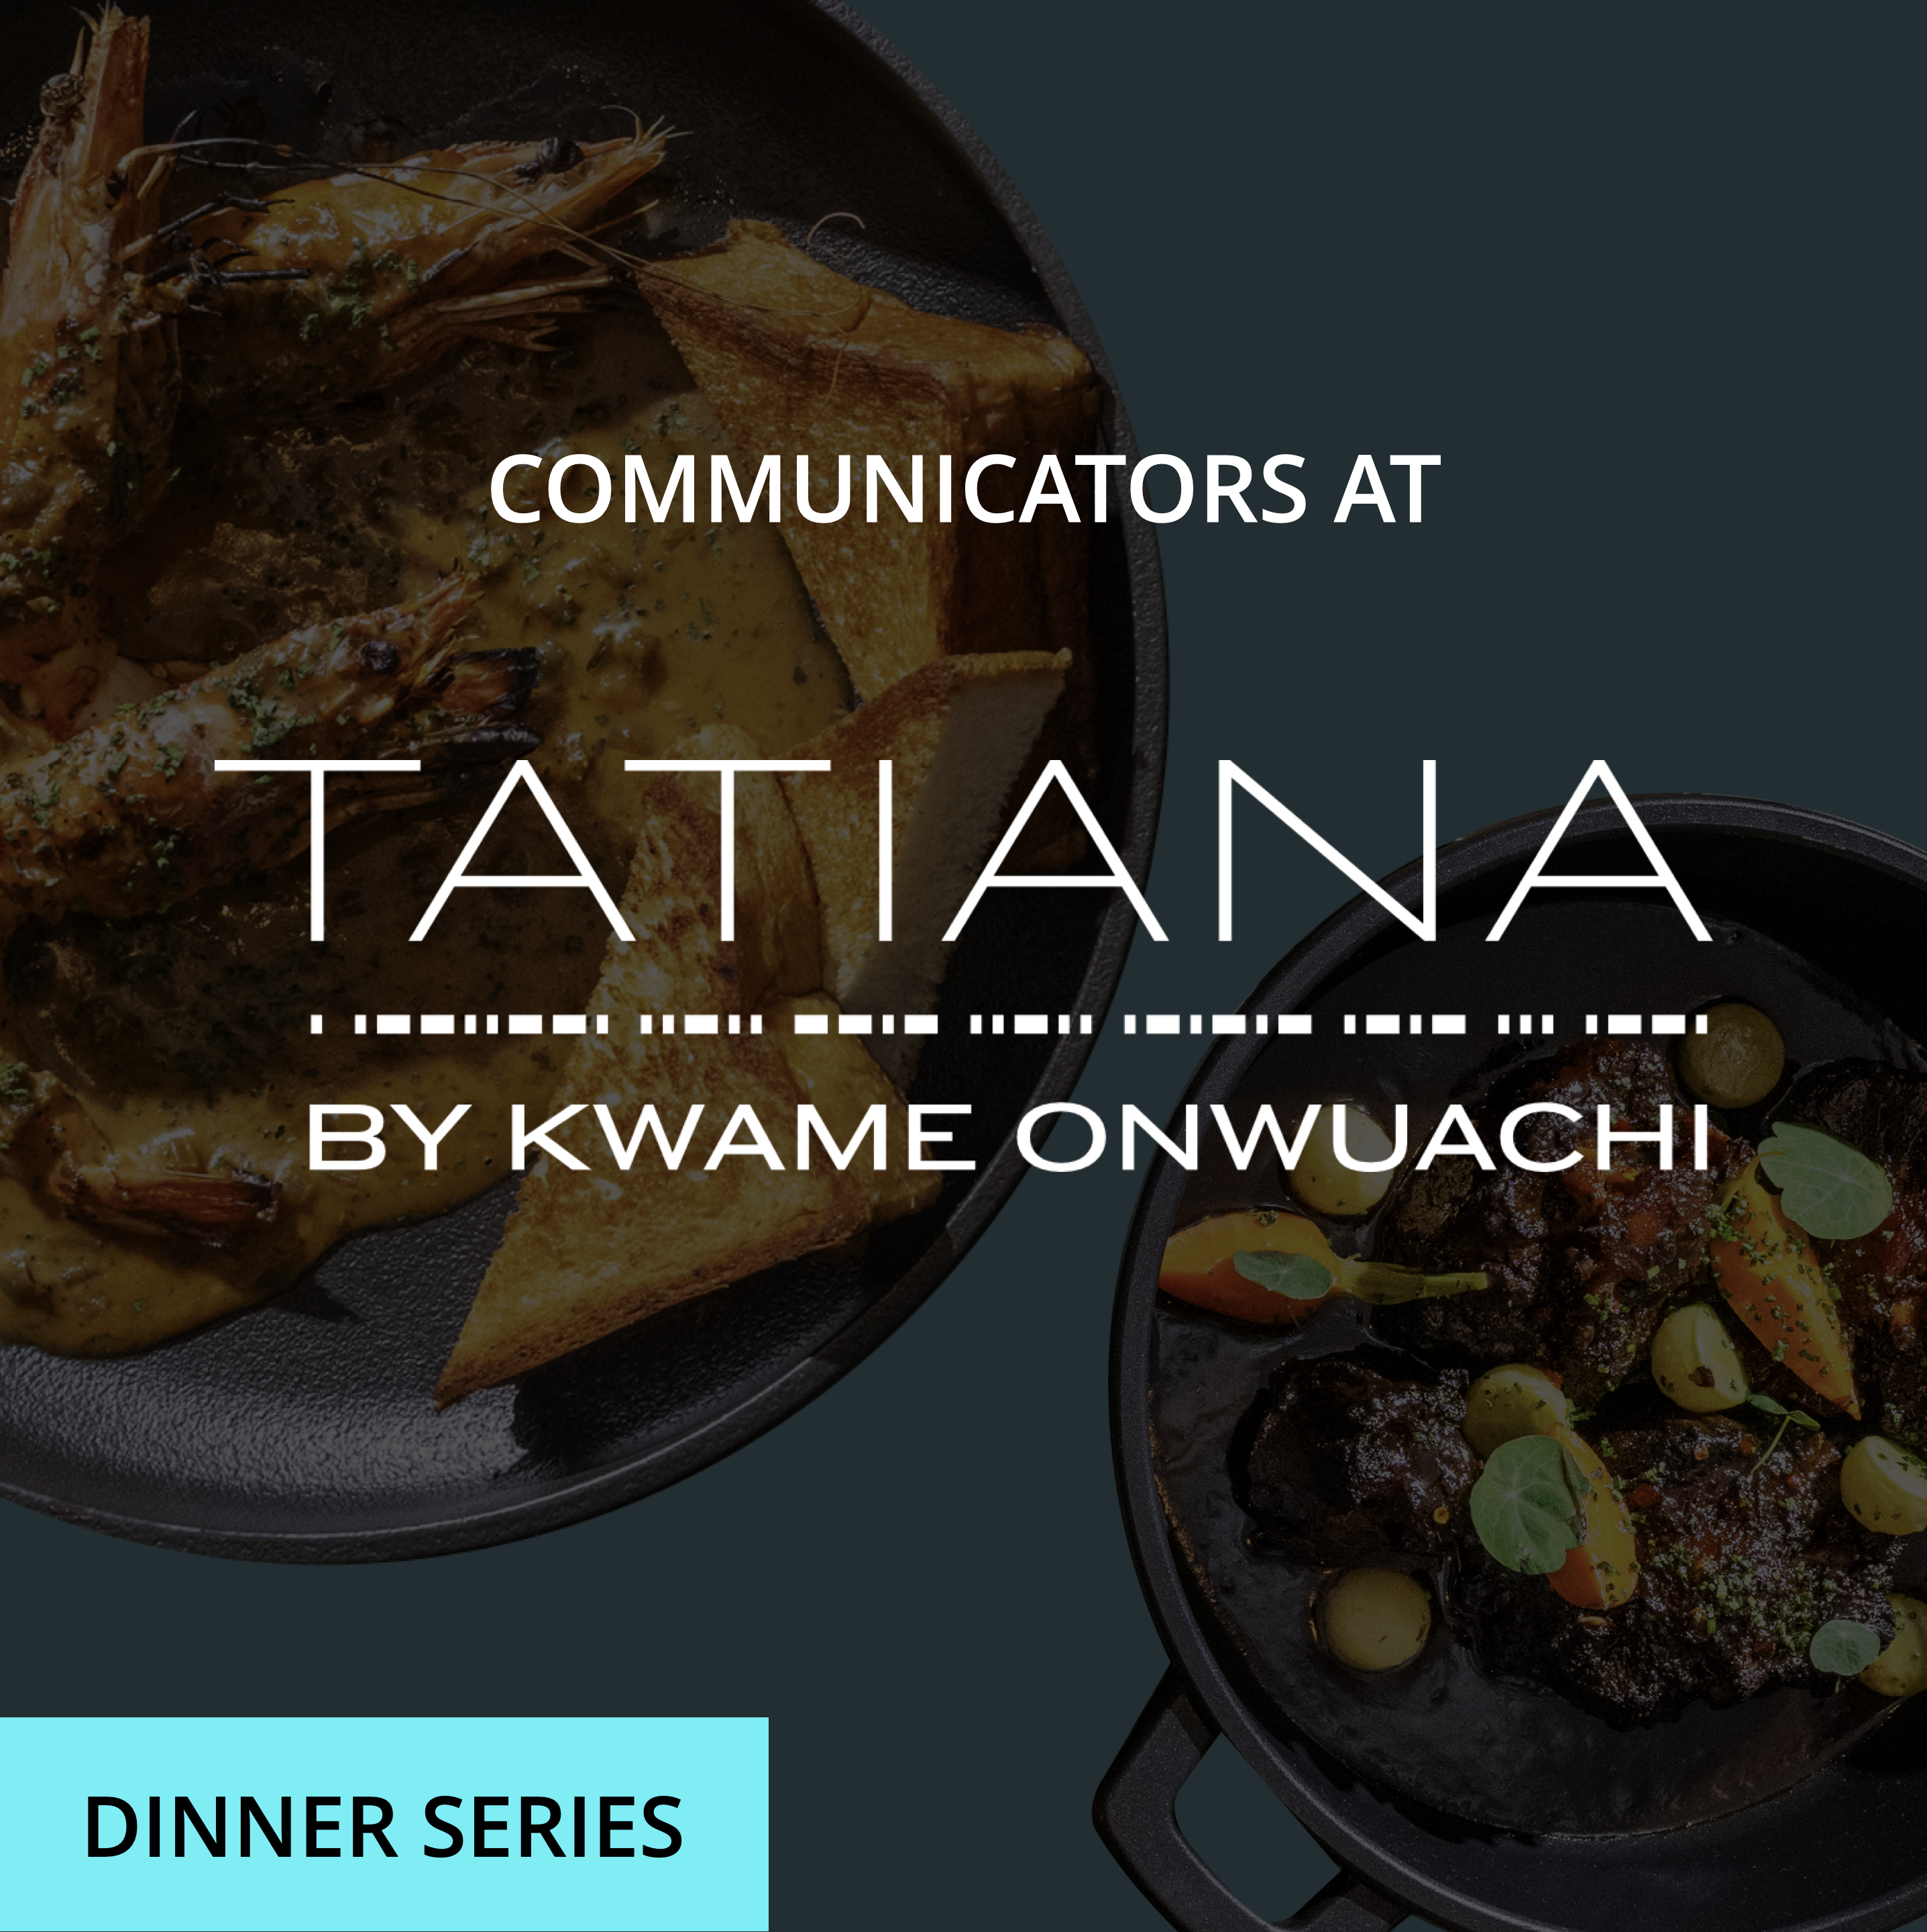 Tatiana comms networking dinner